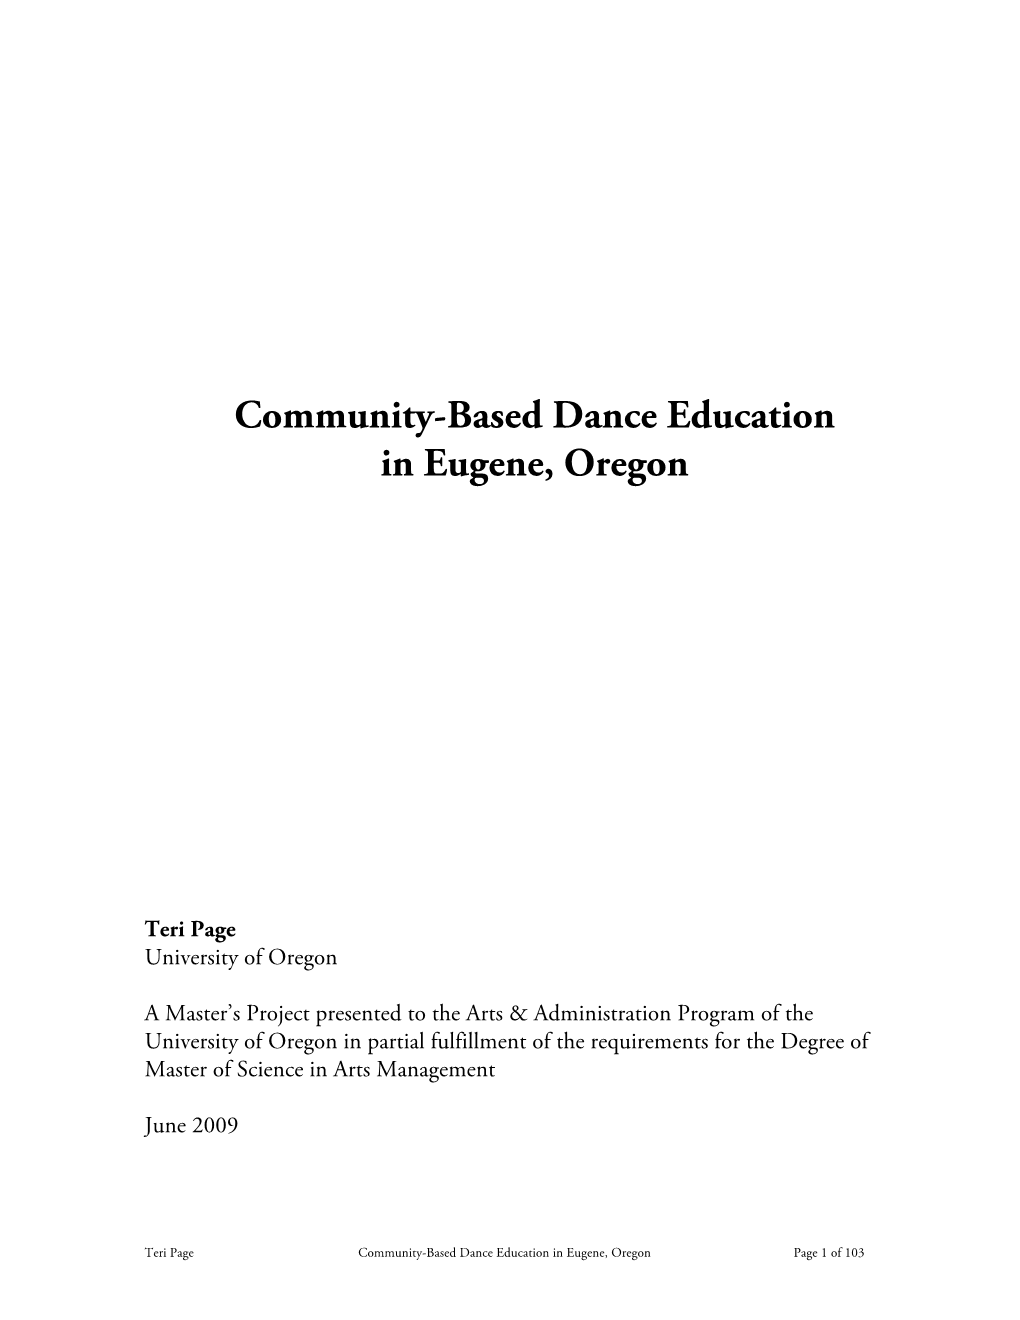 Community-Based Dance Education in Eugene, Oregon